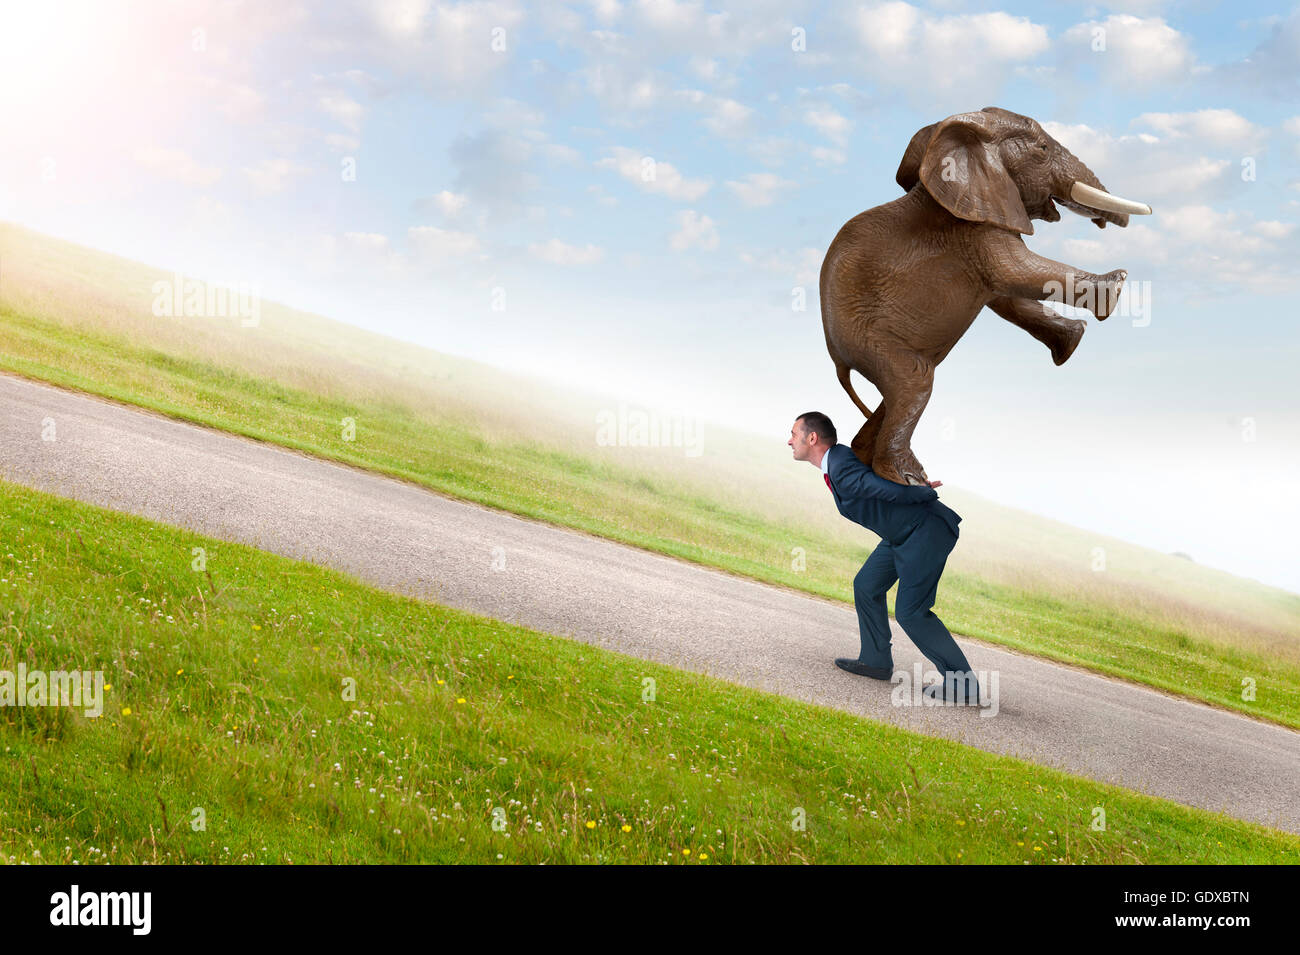 Business avversità nozione di imprenditore elefante porta in salita Foto Stock